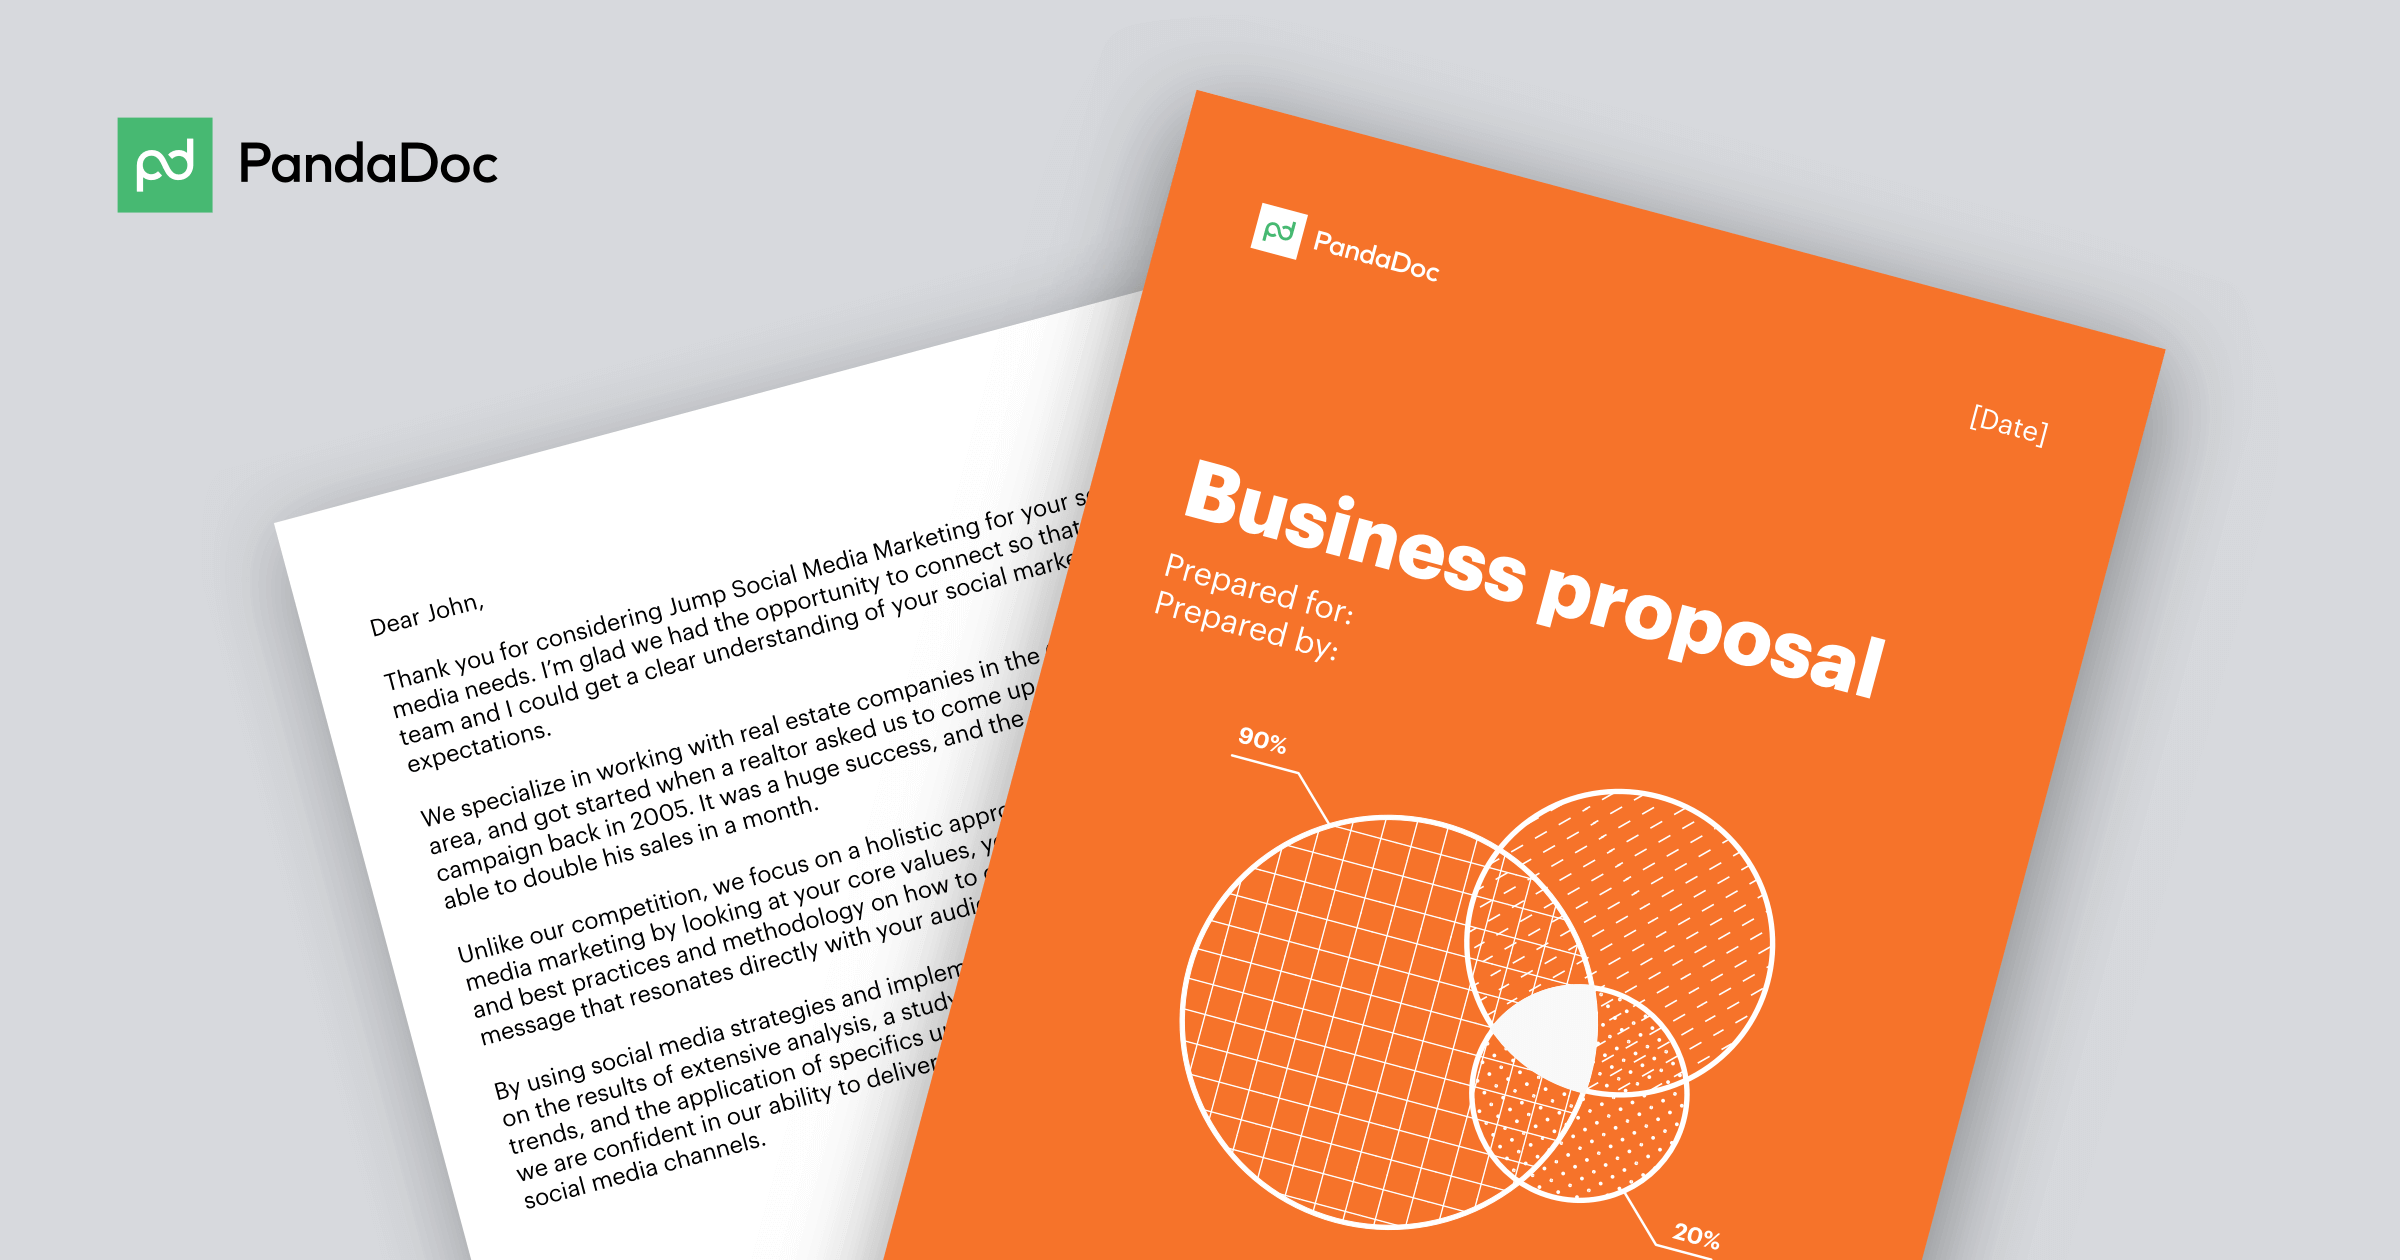 Proposal writing companies